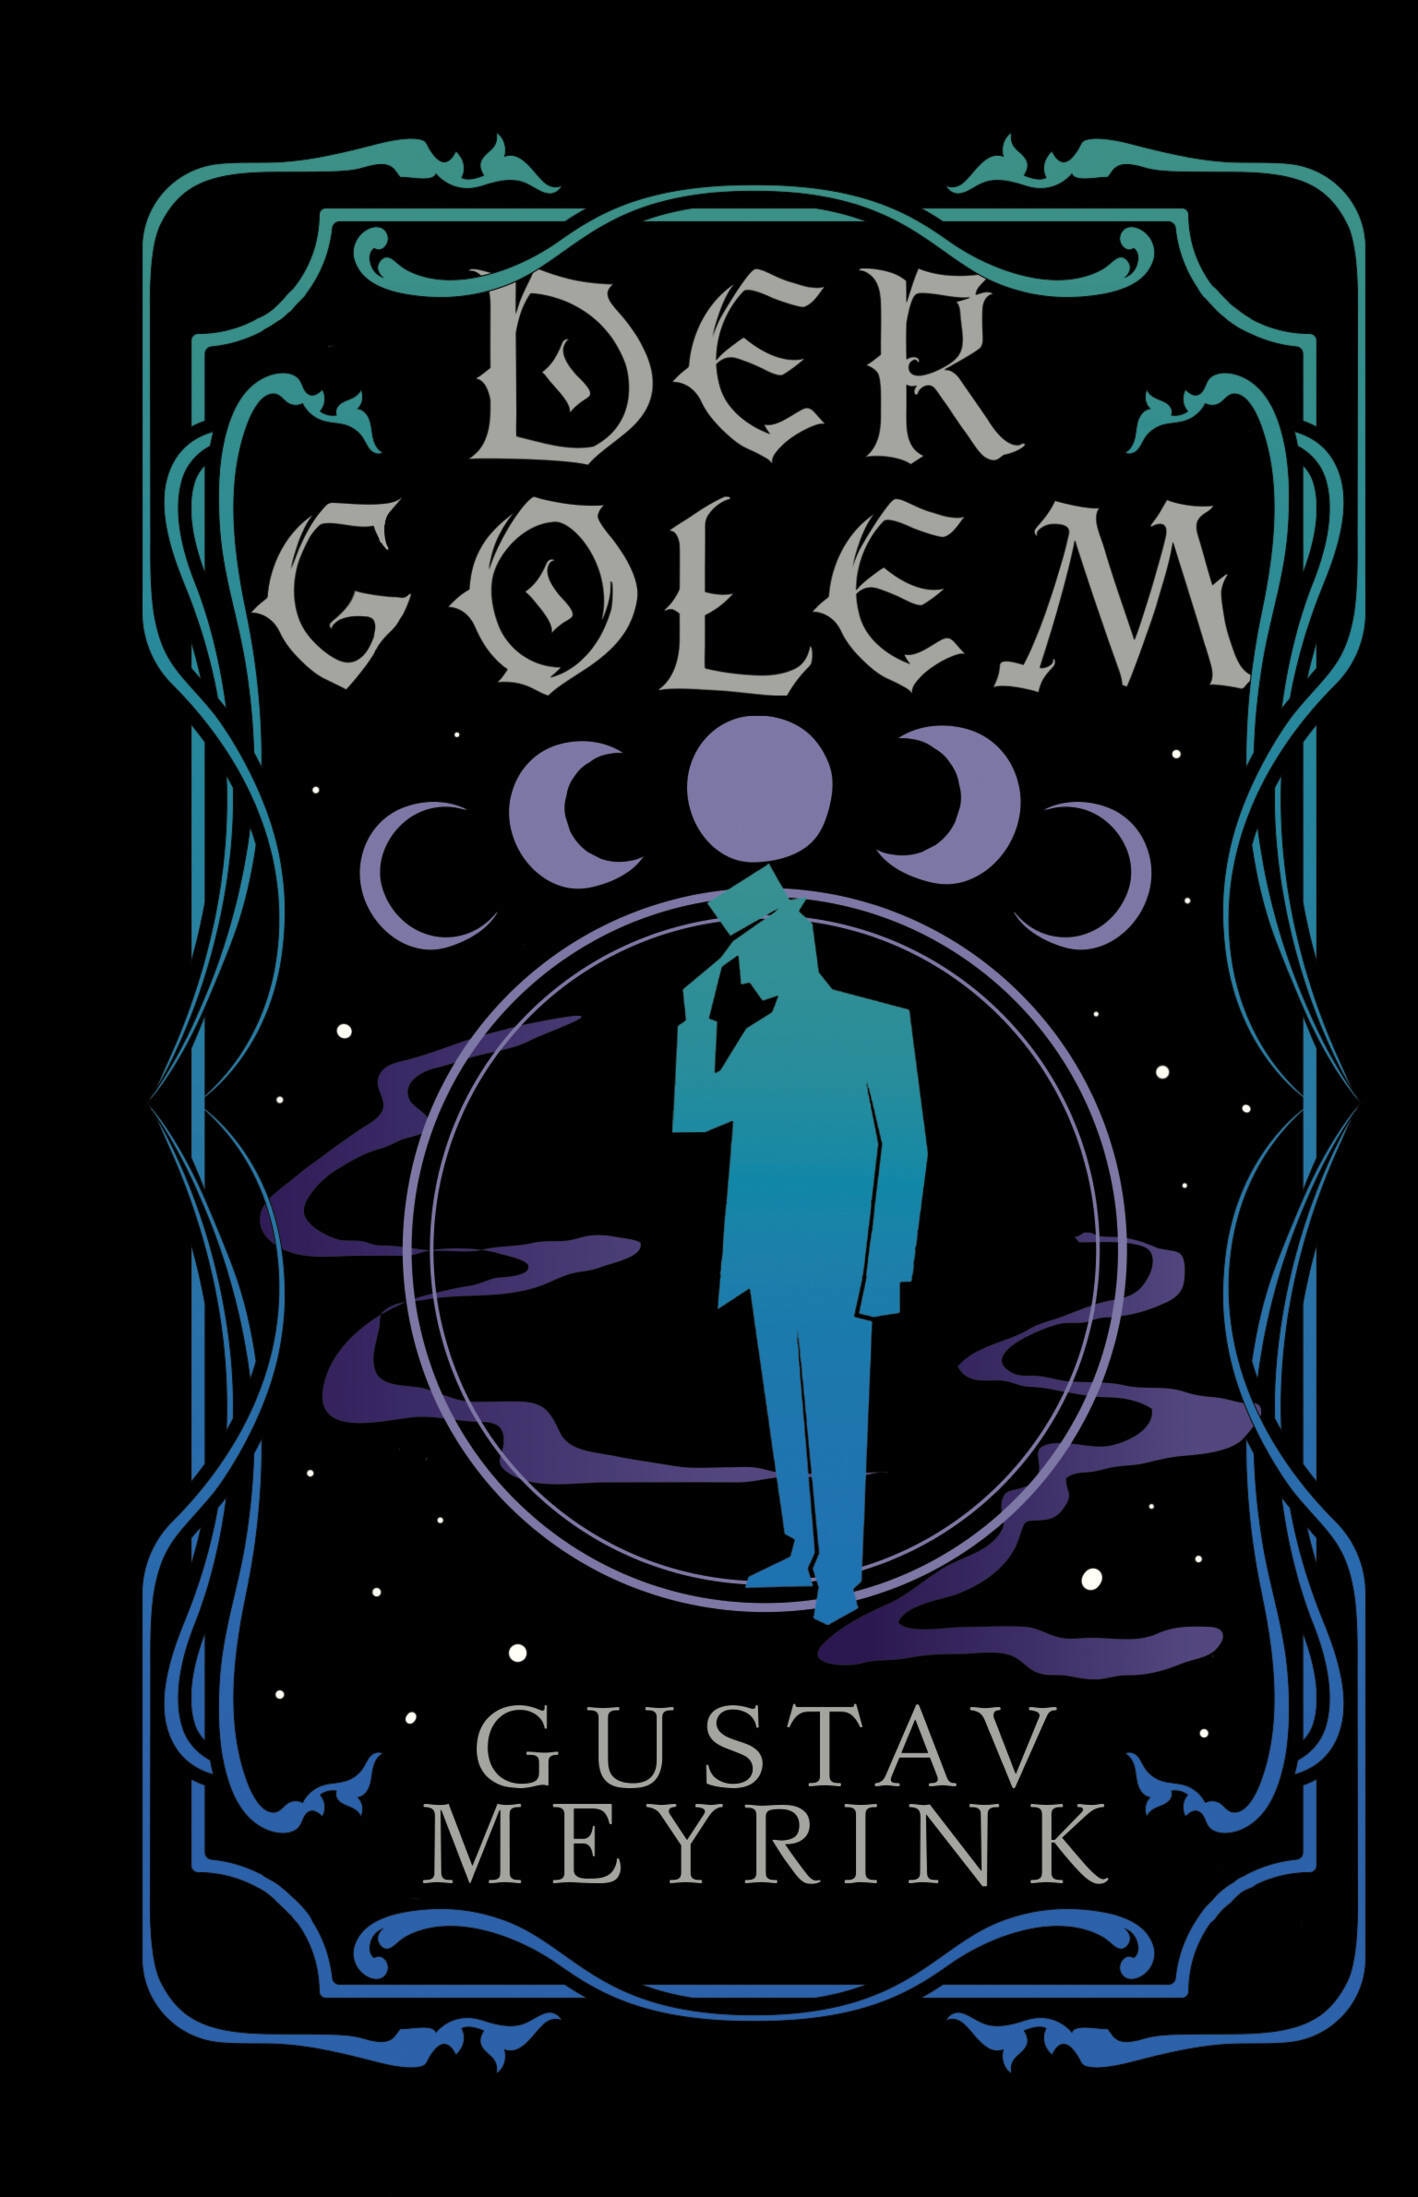 Book “Der Golem” by Густав Майринк — 2023